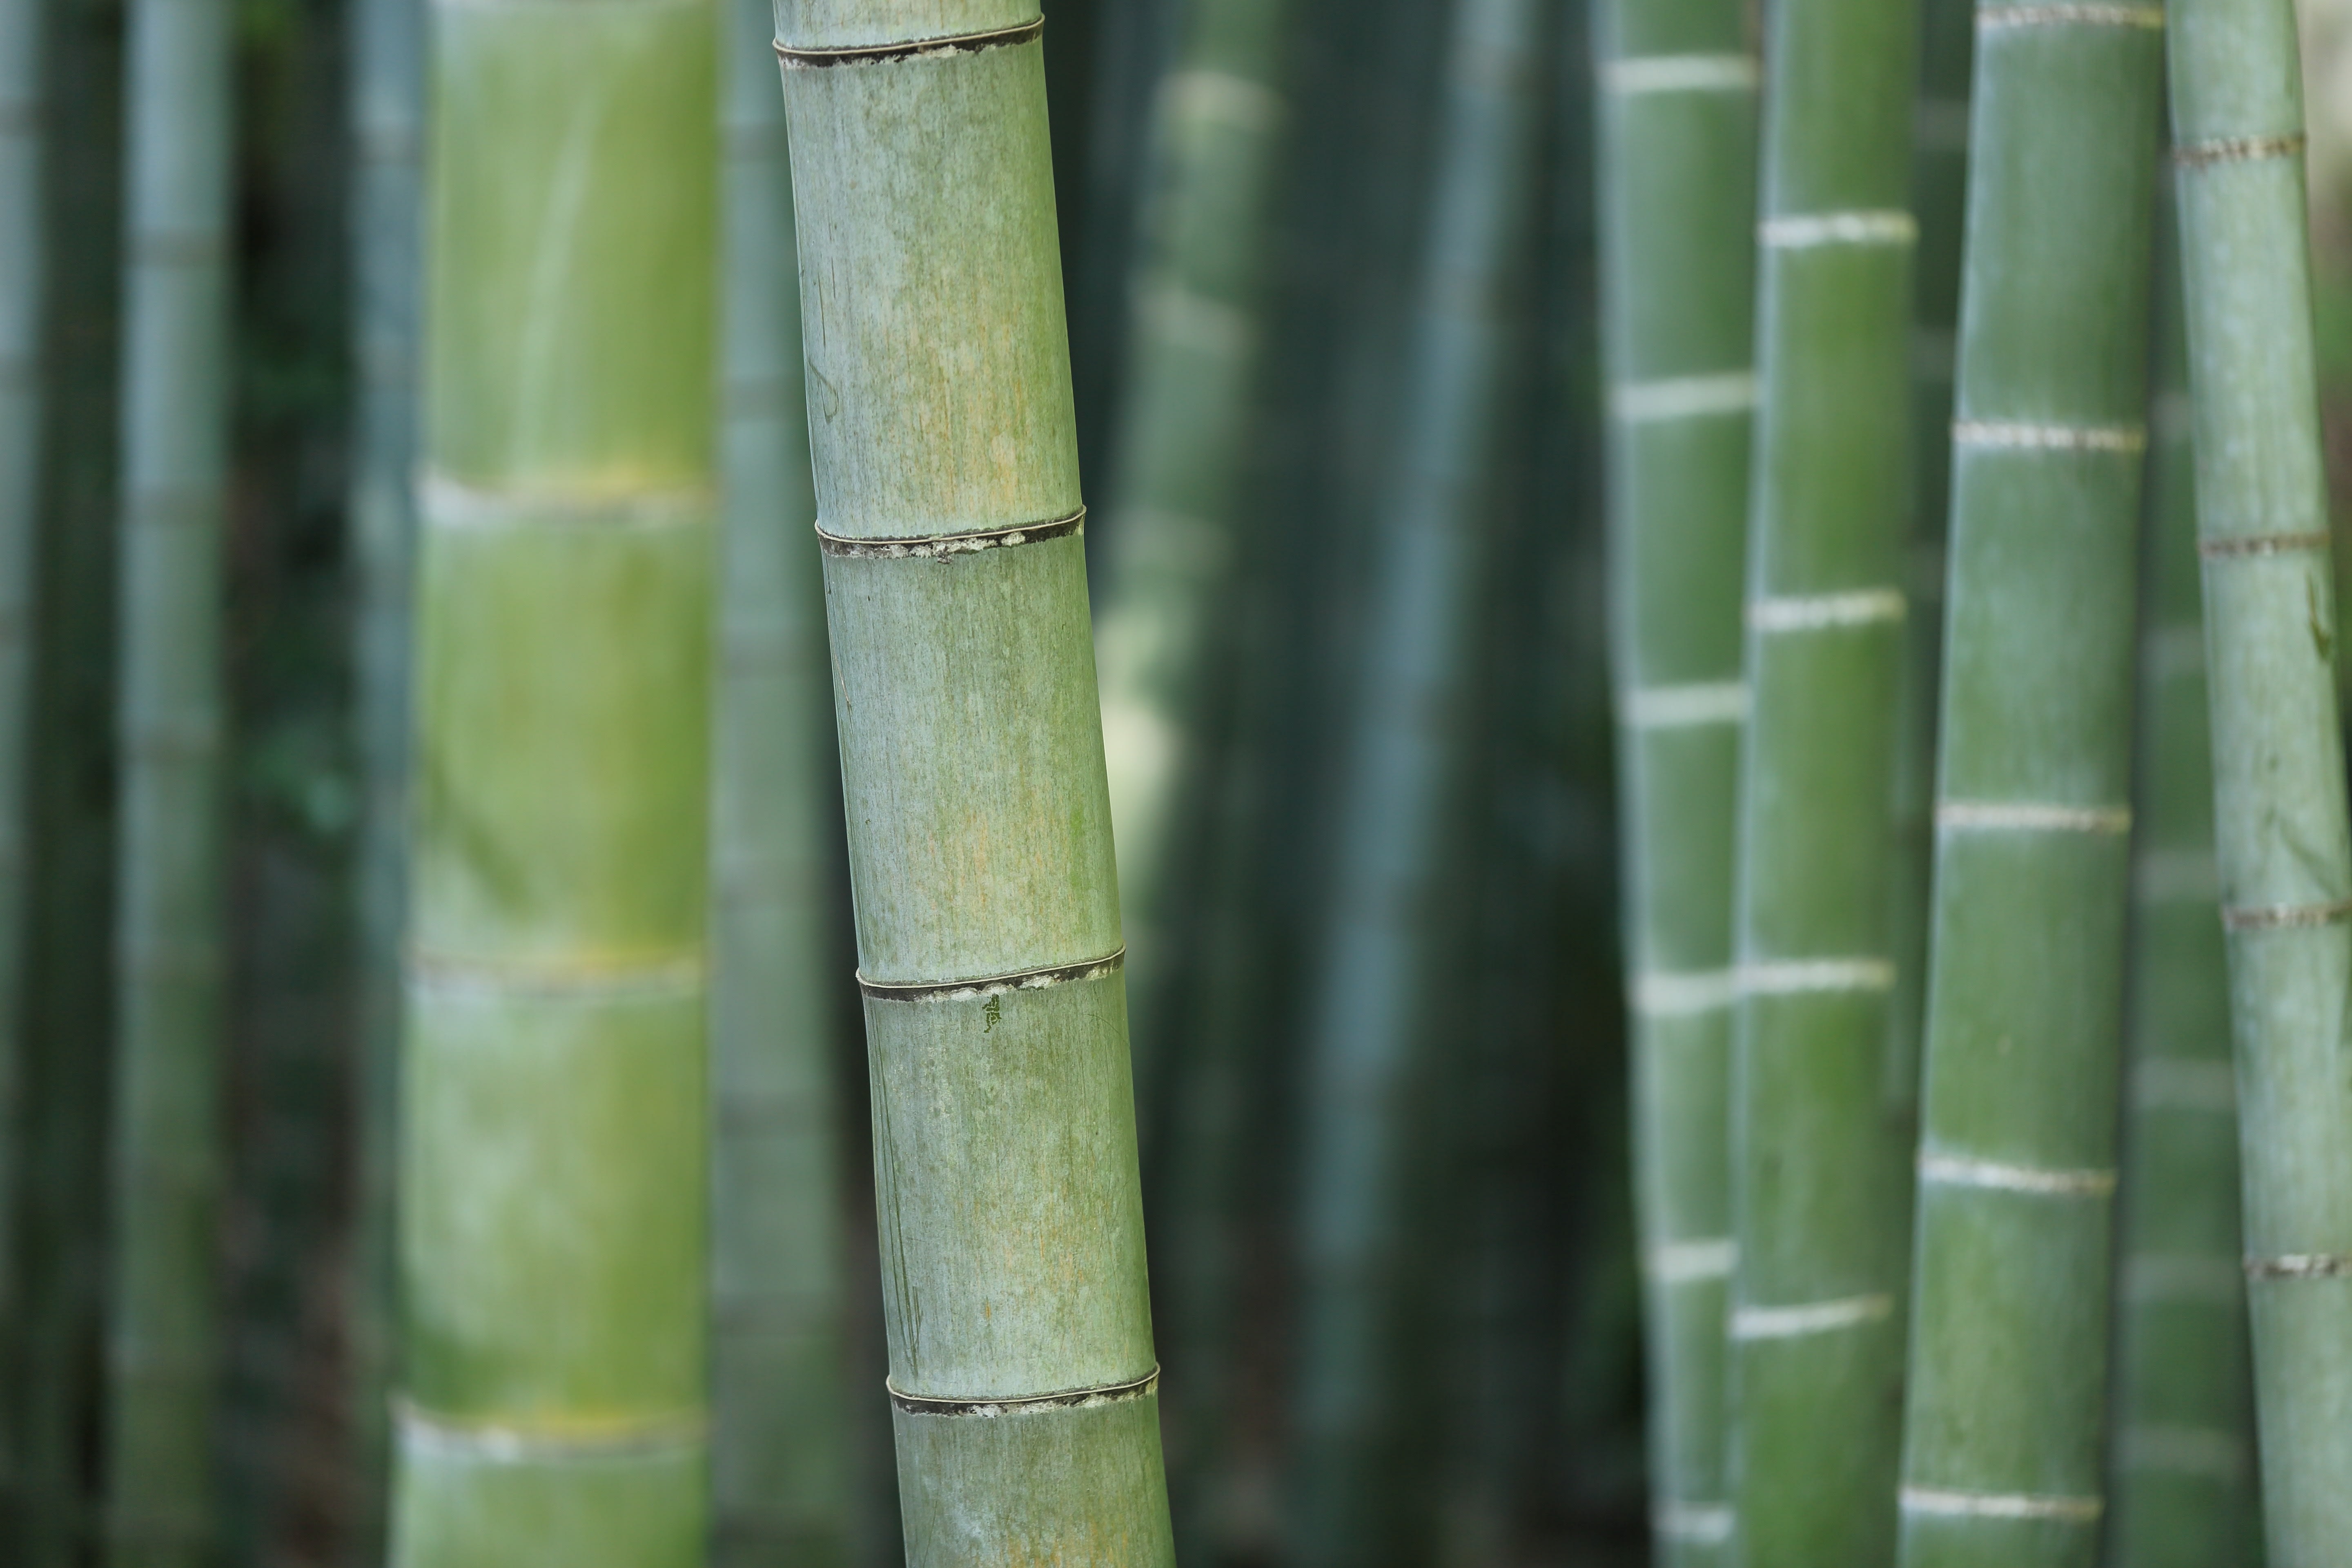 bamboo photo